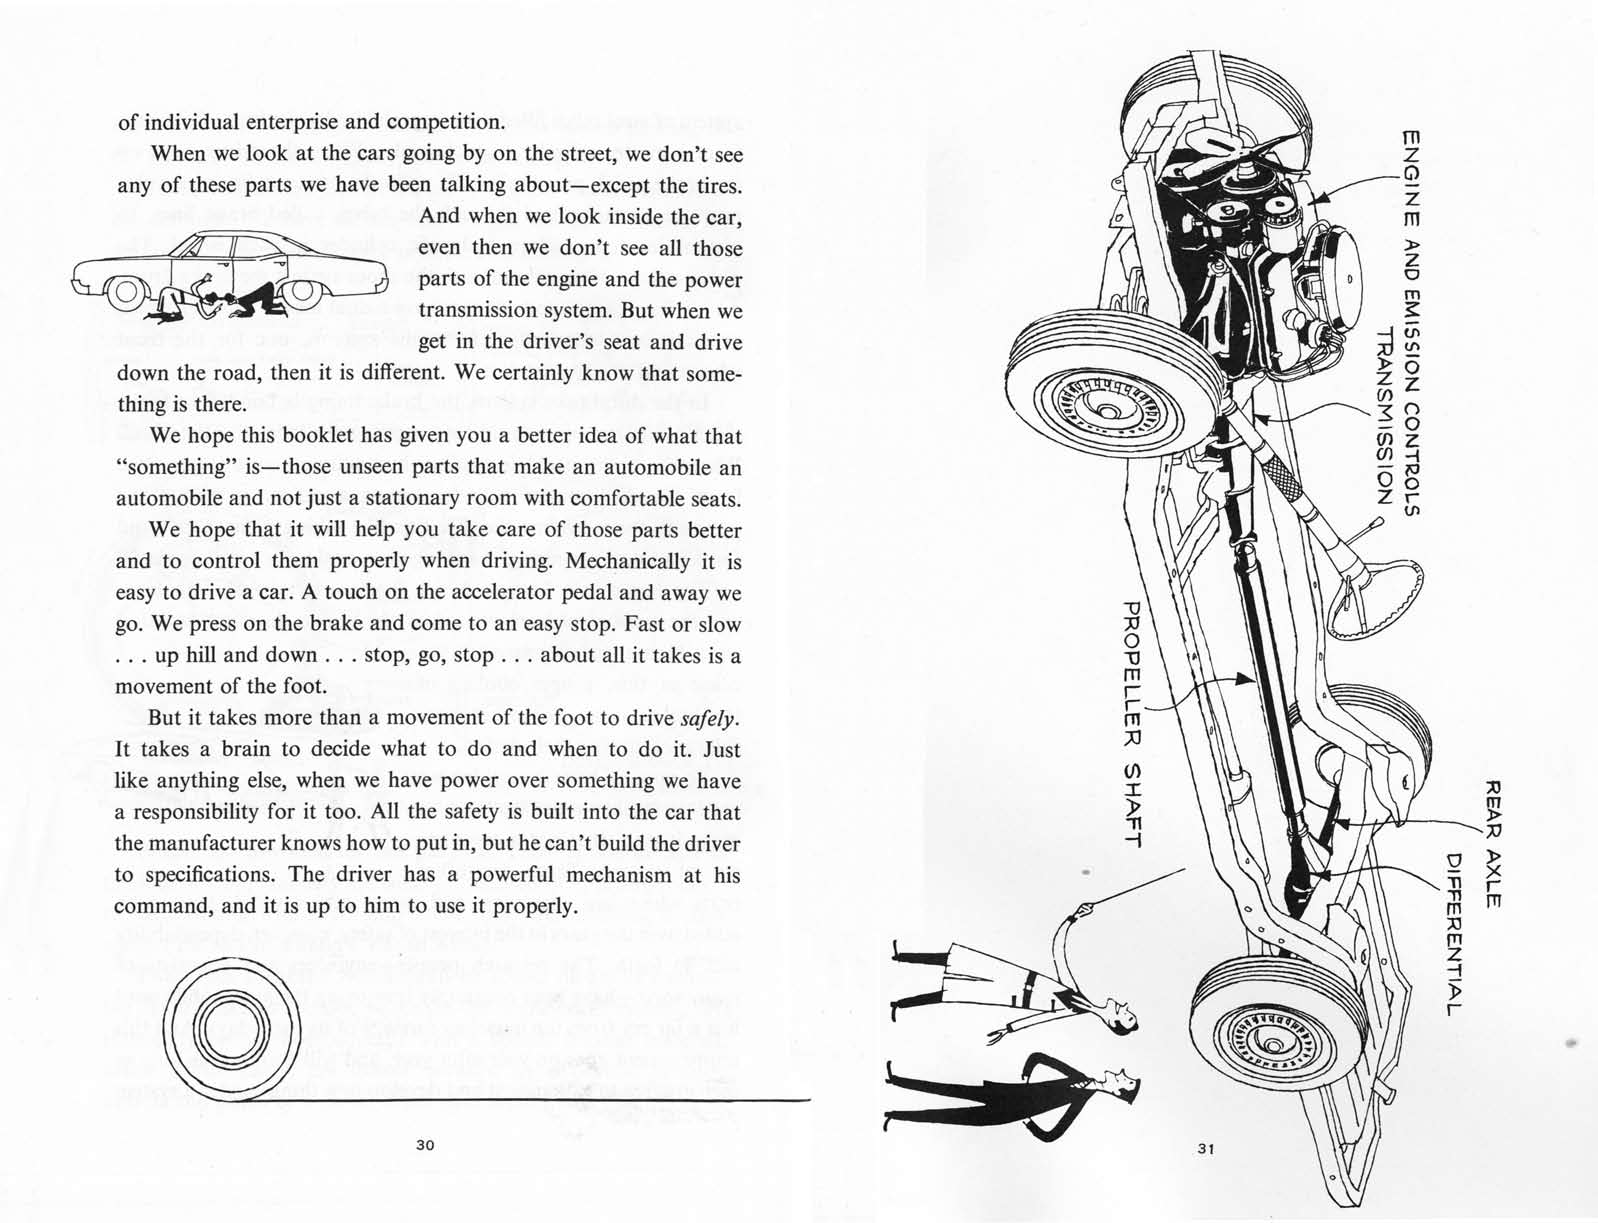 n_1953-How The Wheels Revolve-30-31.jpg